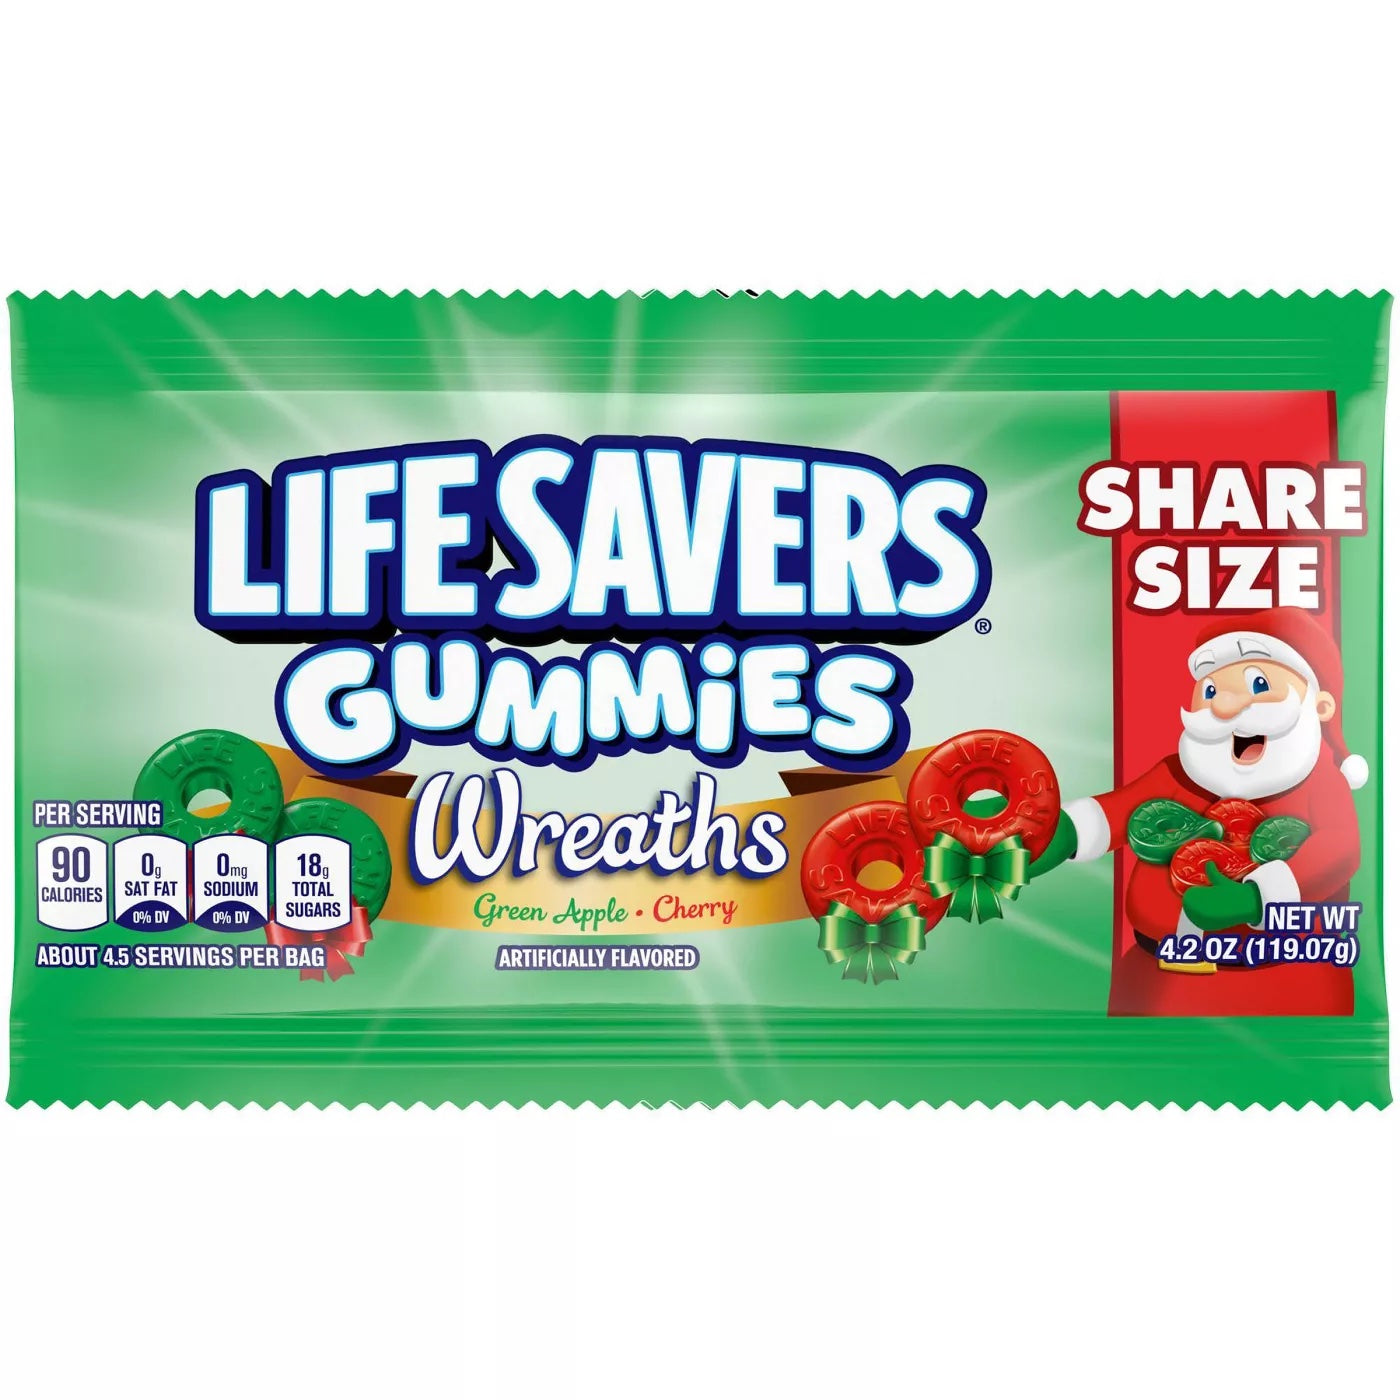 Lifesavers Gummies Wreaths, Share Size, 4.2oz